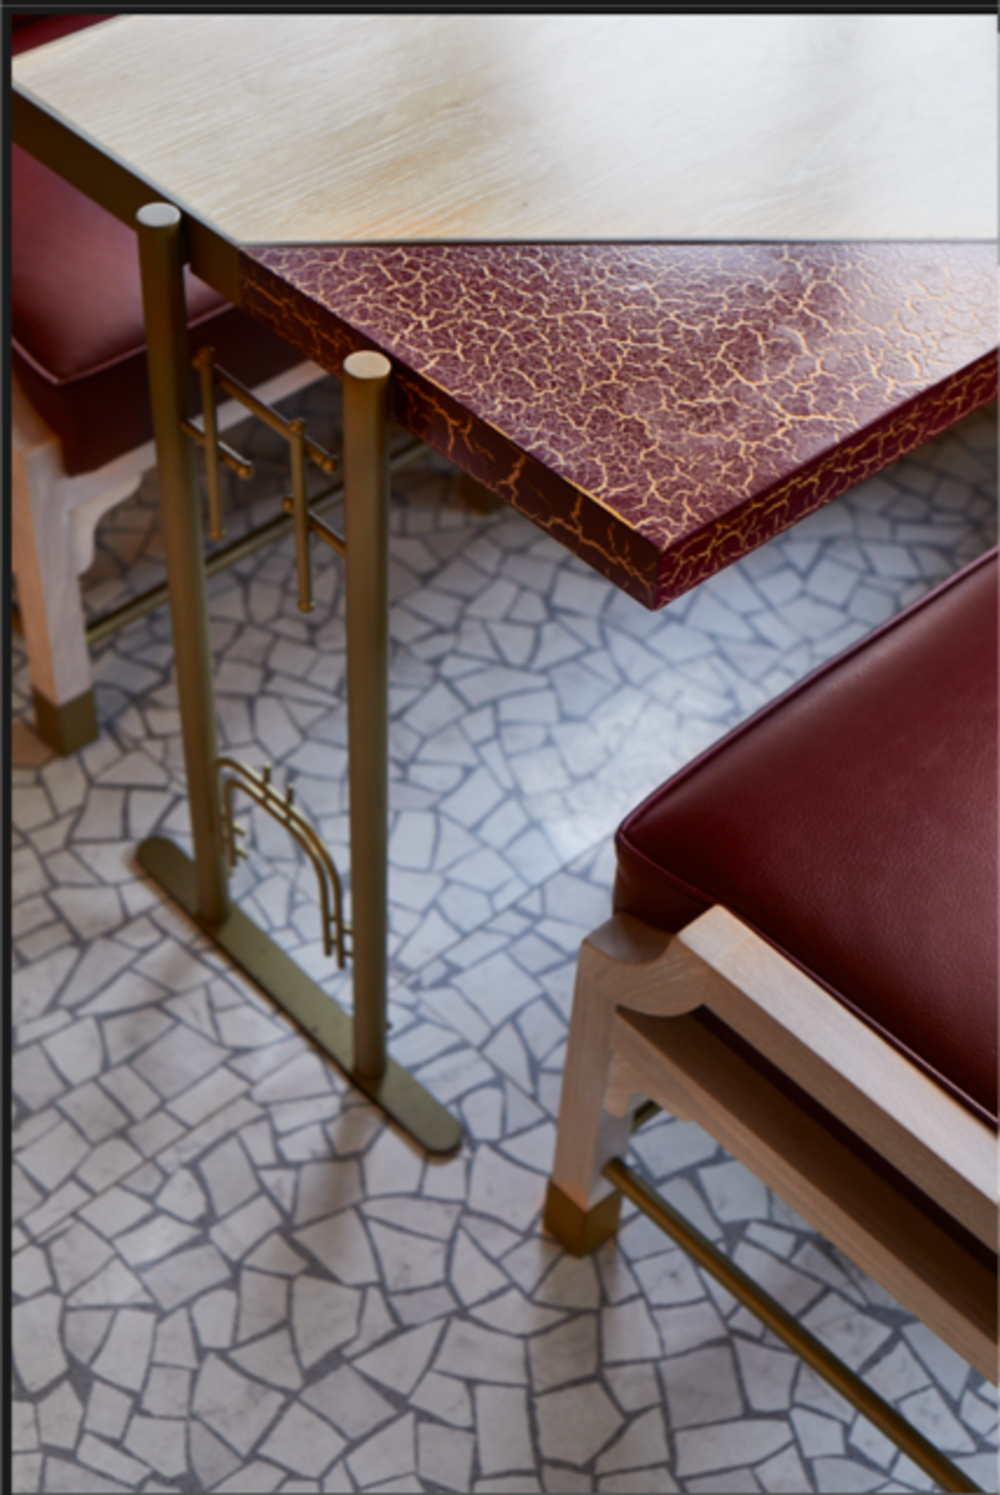 Intricate marble table & floor detail